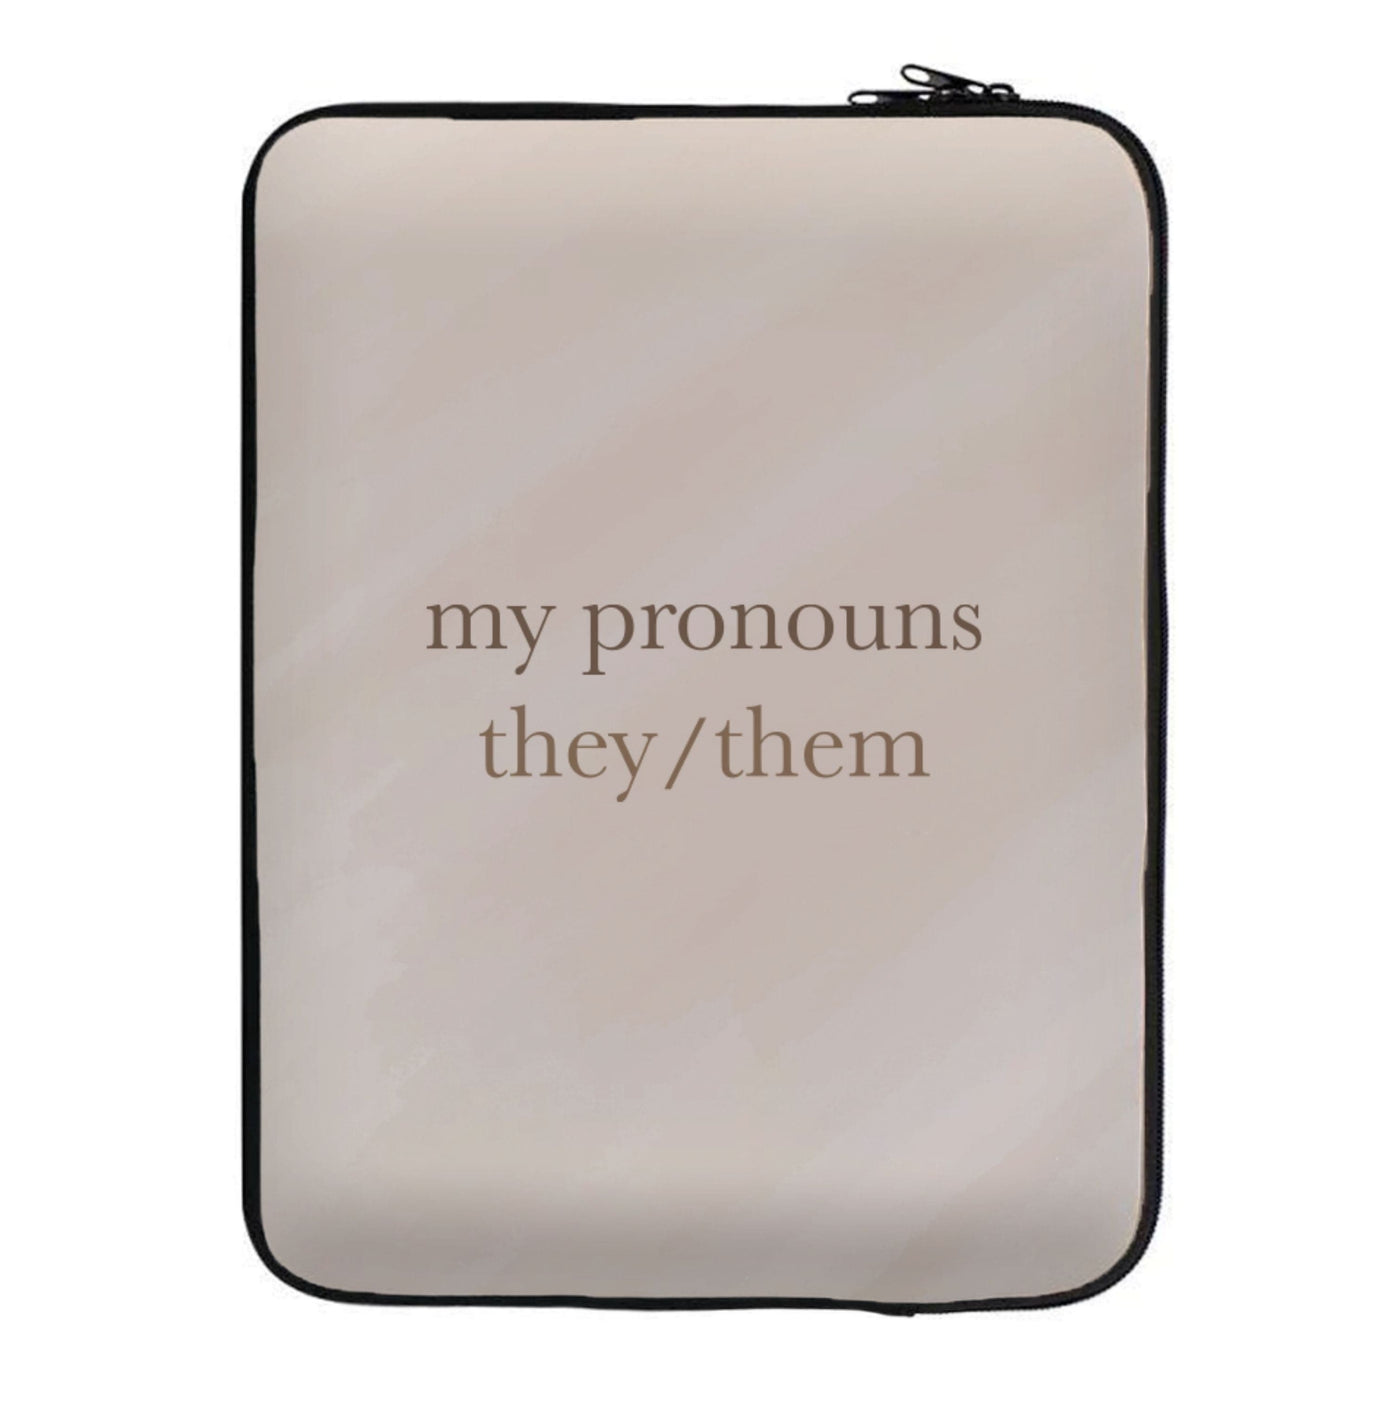 They & Them - Pronouns Laptop Sleeve